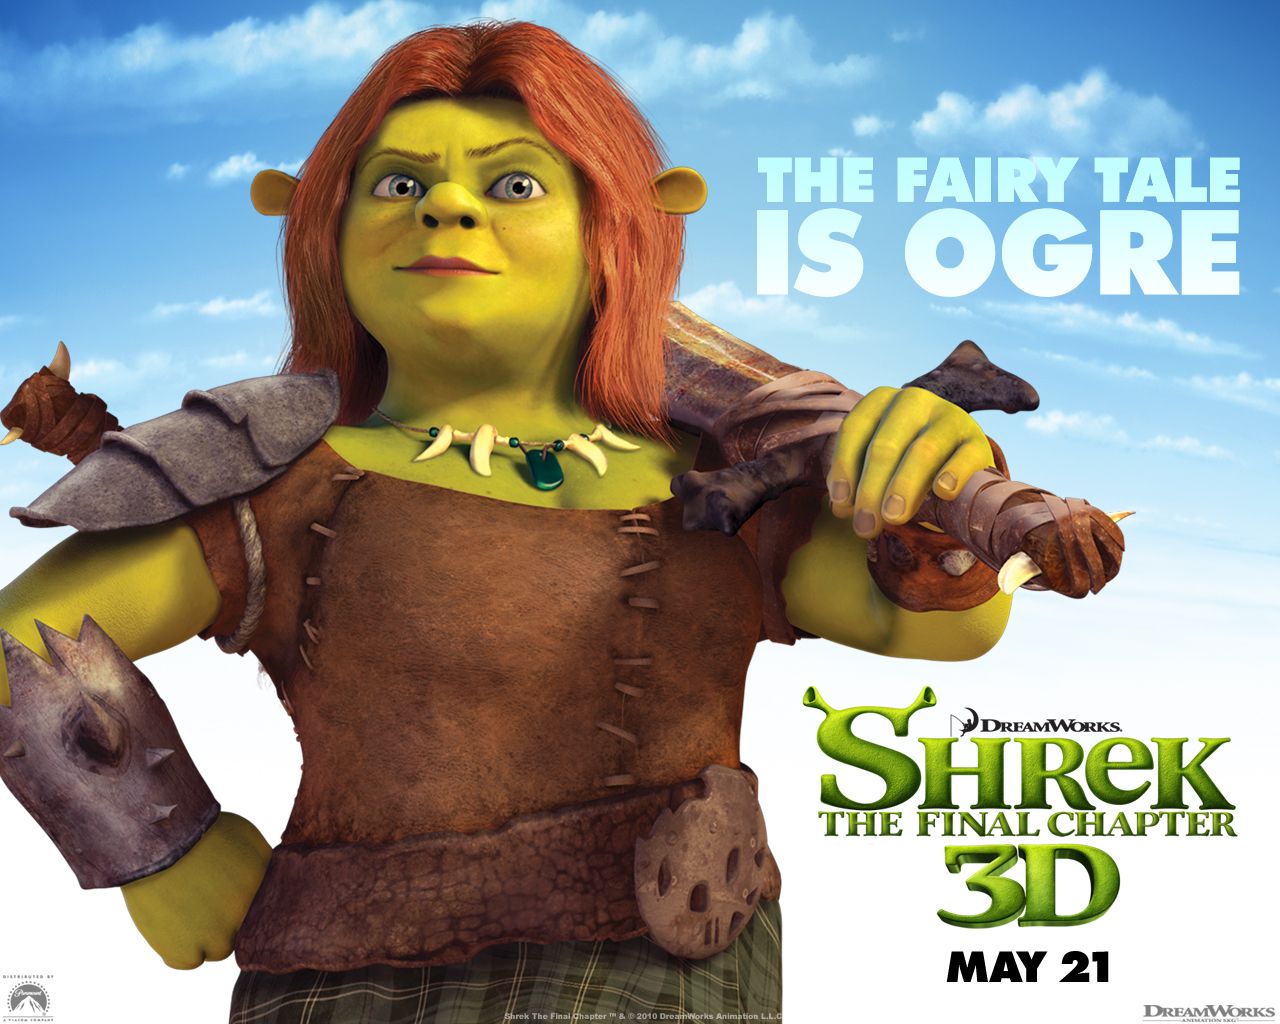 free for mac download Shrek the Third